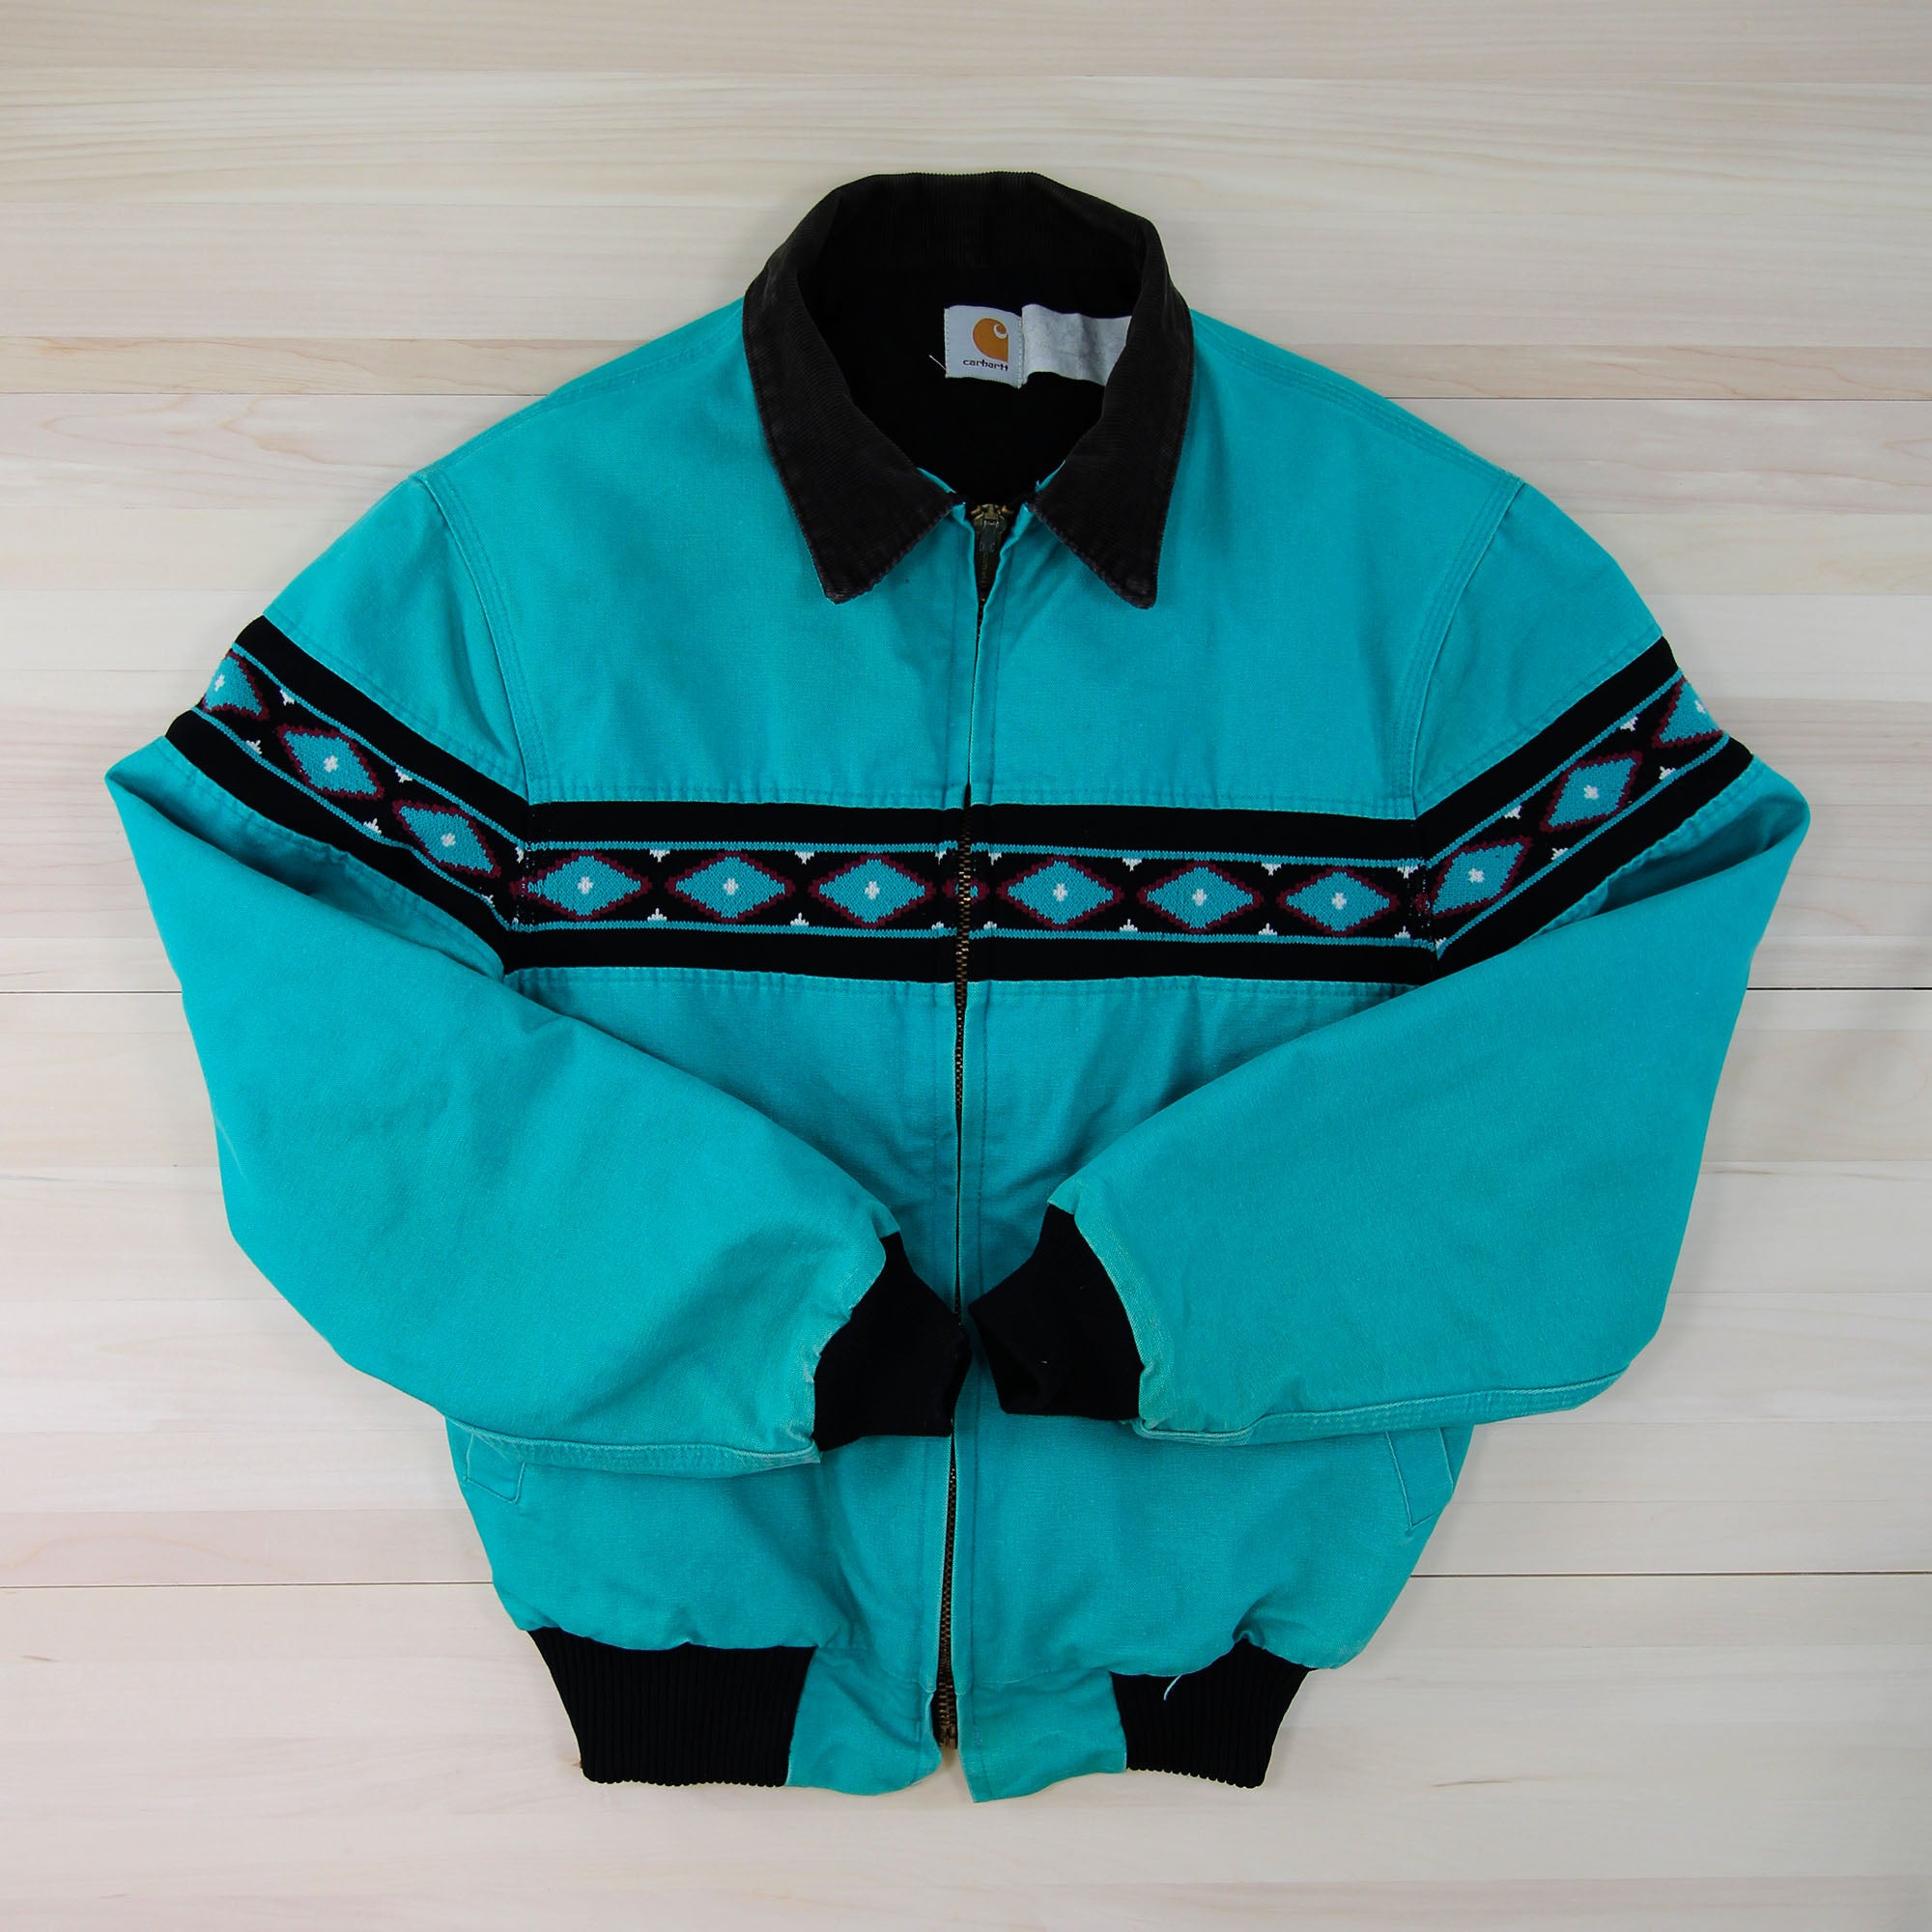 Vintage Carhartt JQ041 Quilted Flannel Lined Southwest Jacket - Large